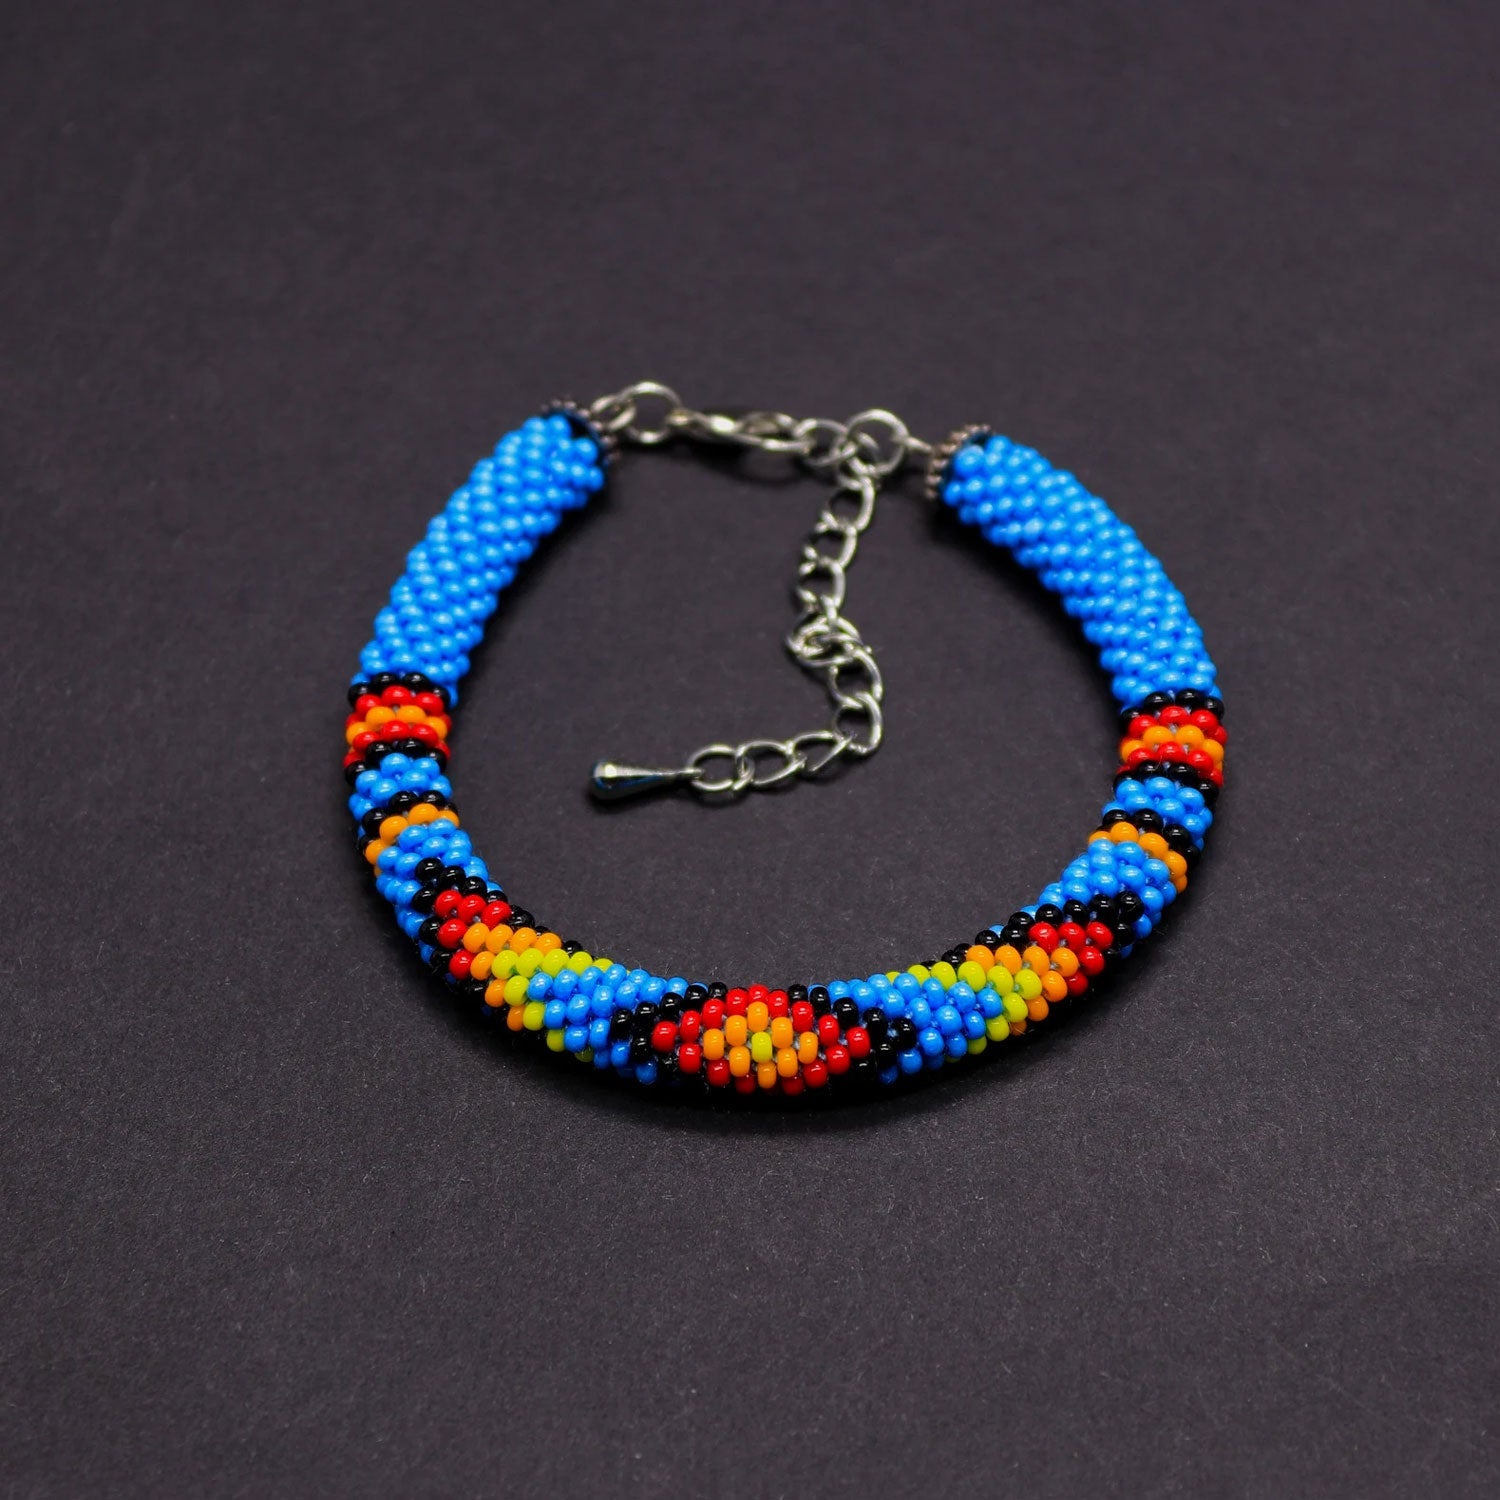 SALE 50% OFF - Native Americans Inspired Beaded Handmade Bracelet